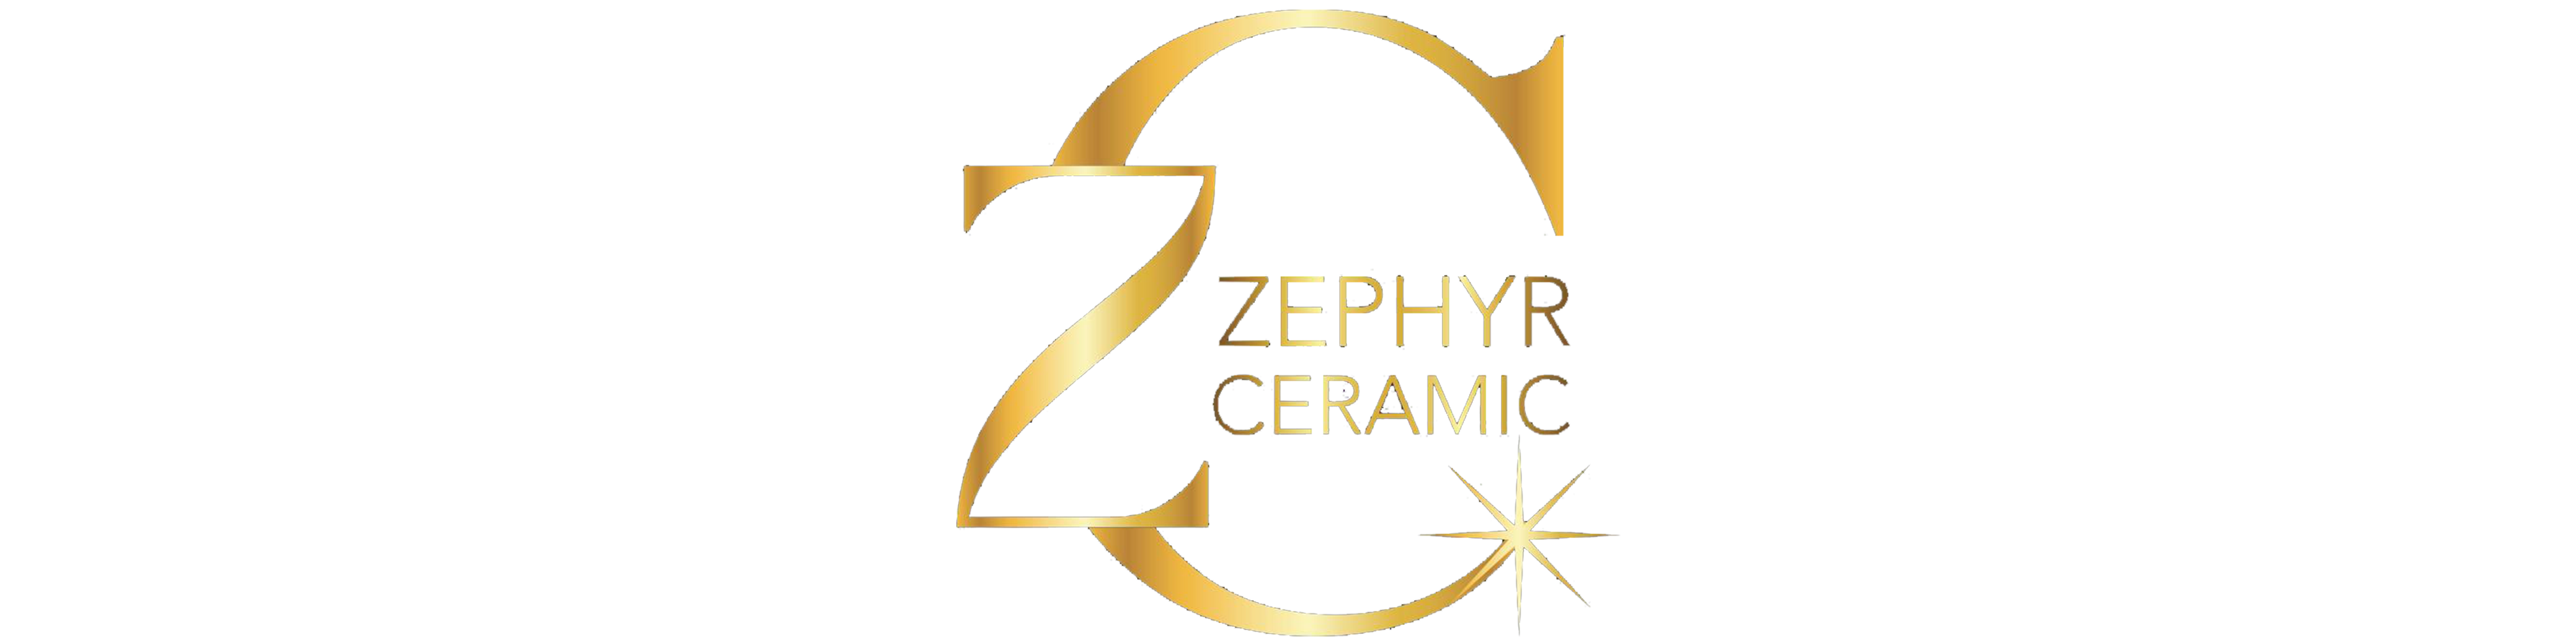 Zephyr Ceramic